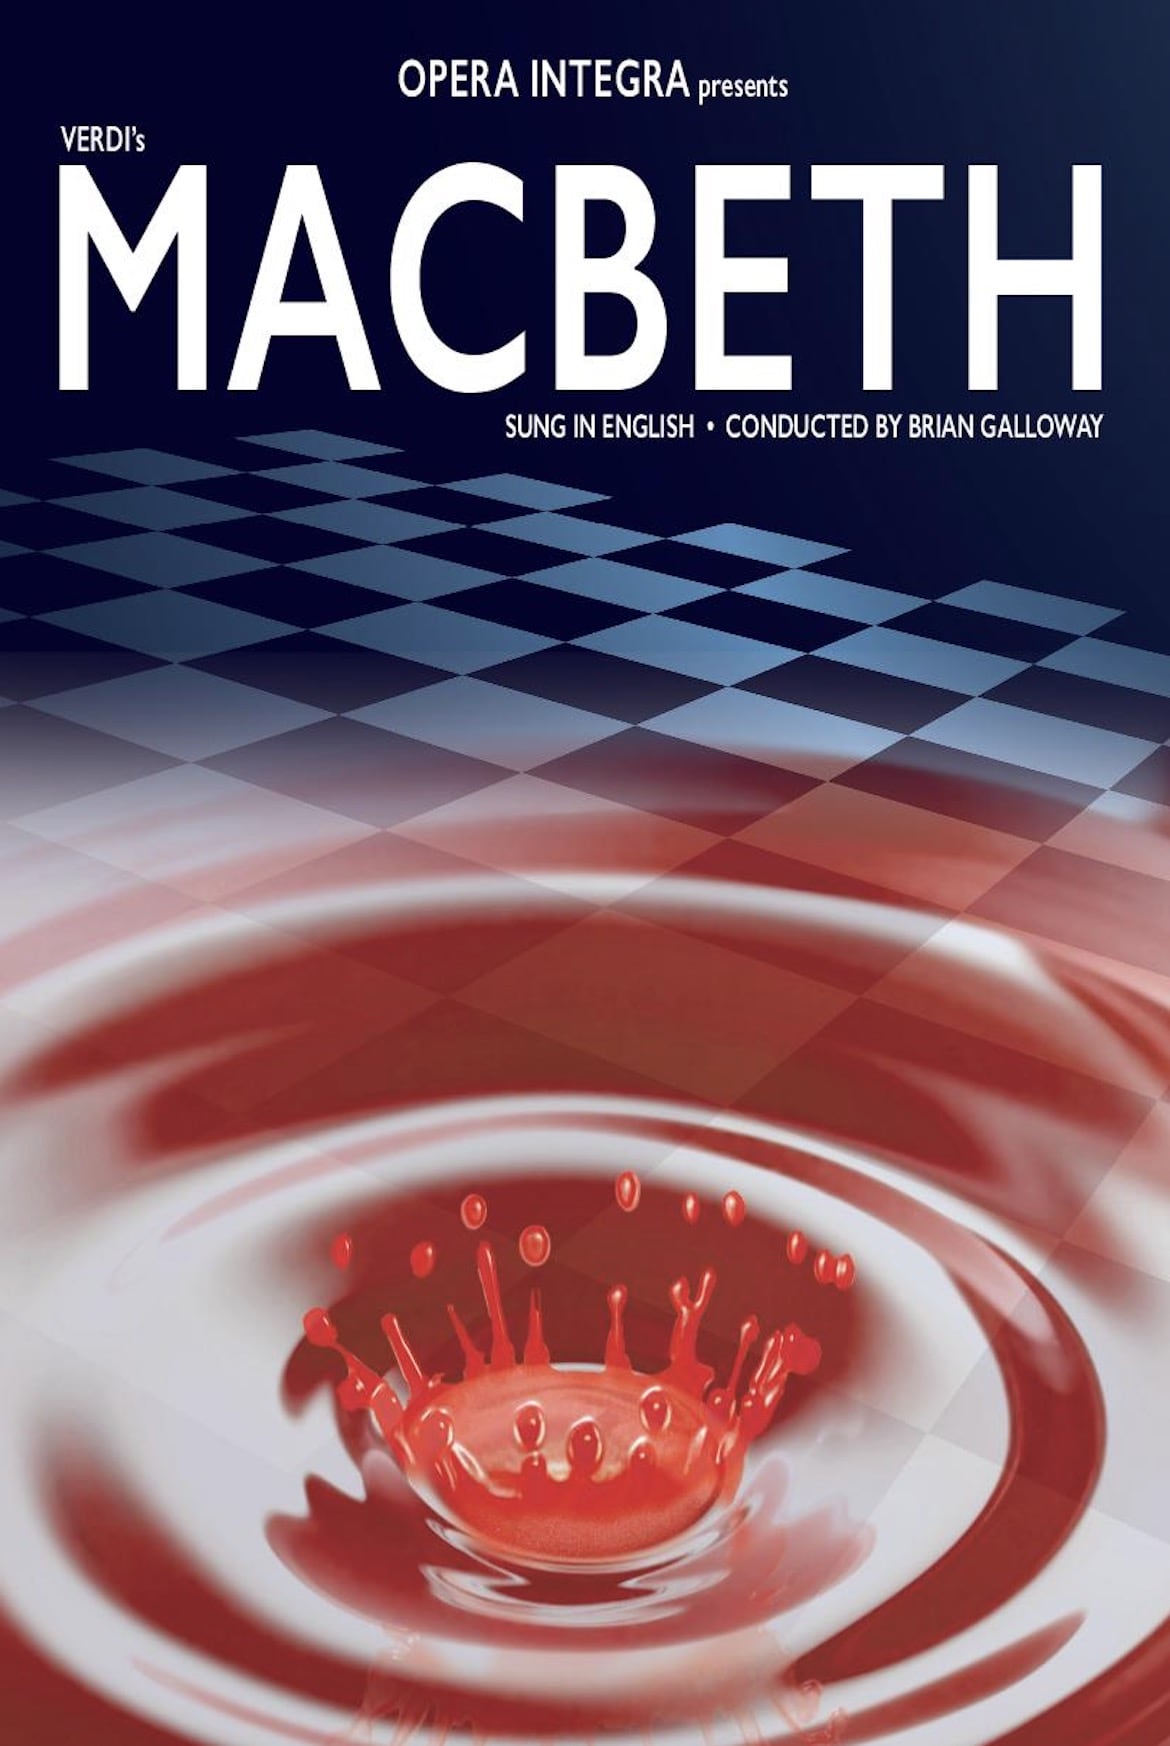 Macbeth 2016 Directed by Ella Marchment for Opera Integra London